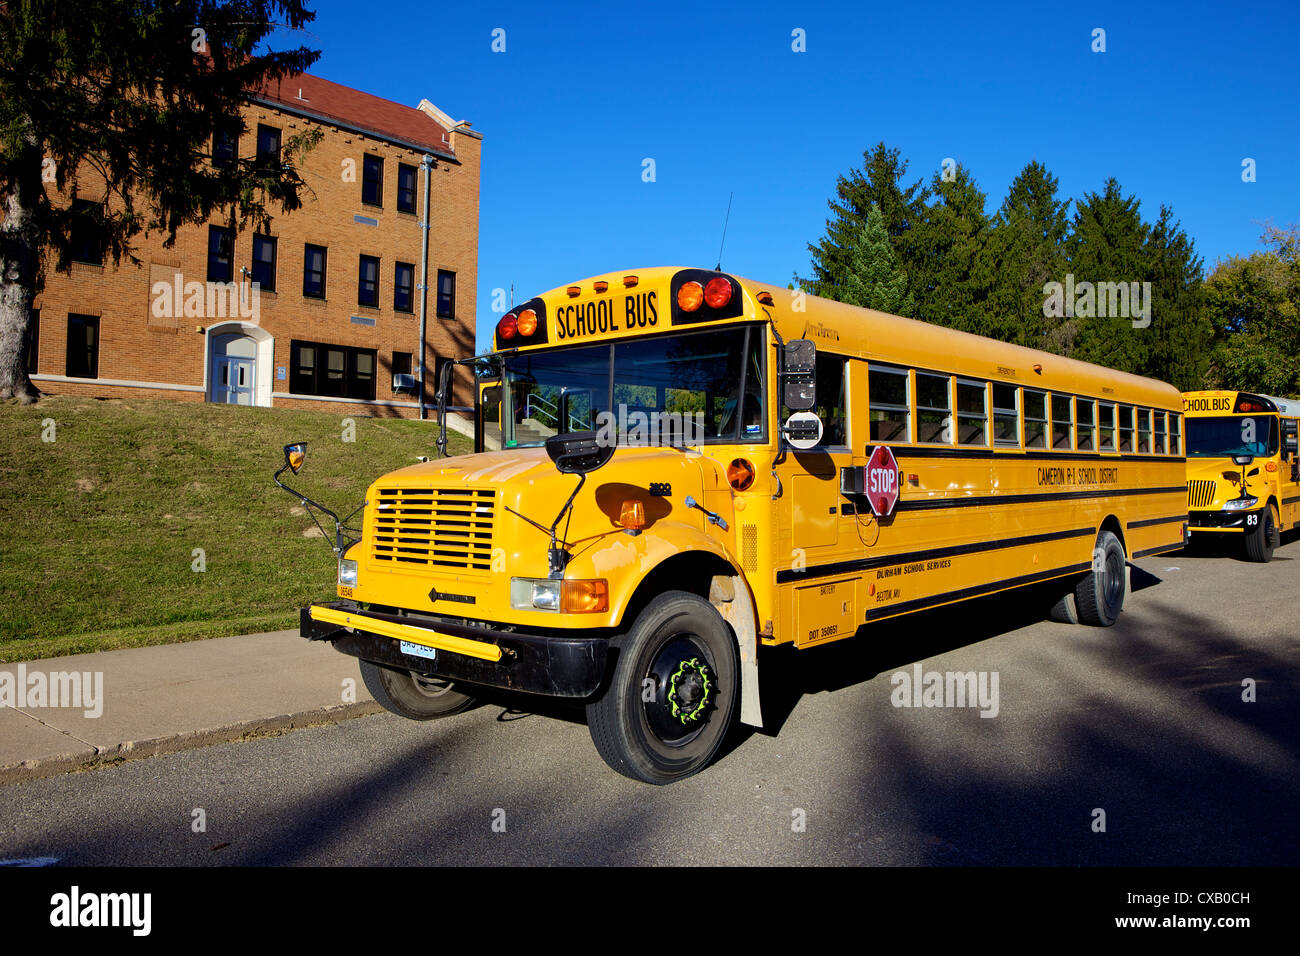 School Bus, St Joseph, Missouri, Midwest, United States of America, North America Stock Photo